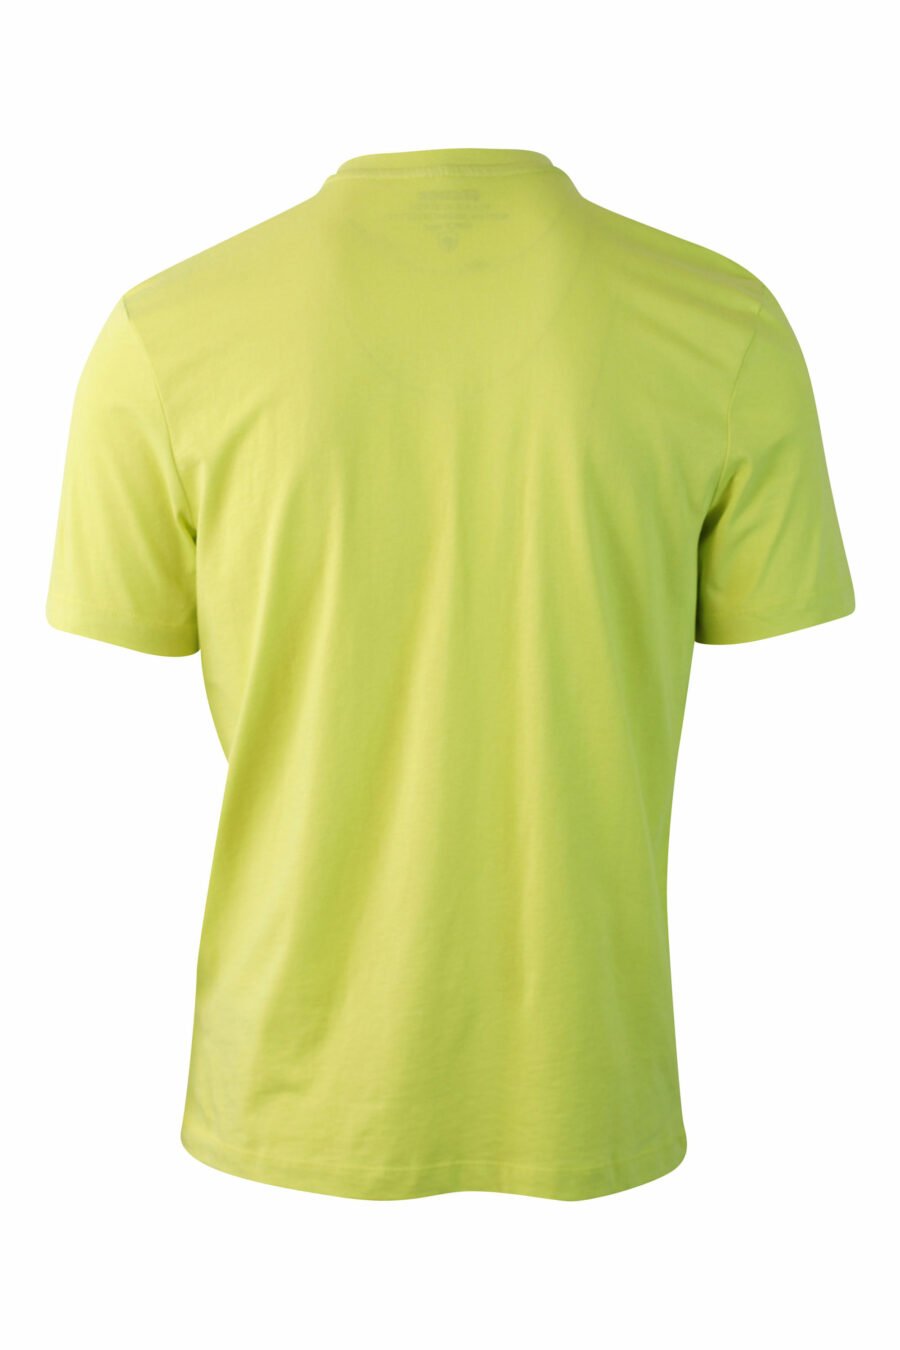 Lindgrünes T-Shirt mit einfarbigem Maxilogo - IMG 0074 1